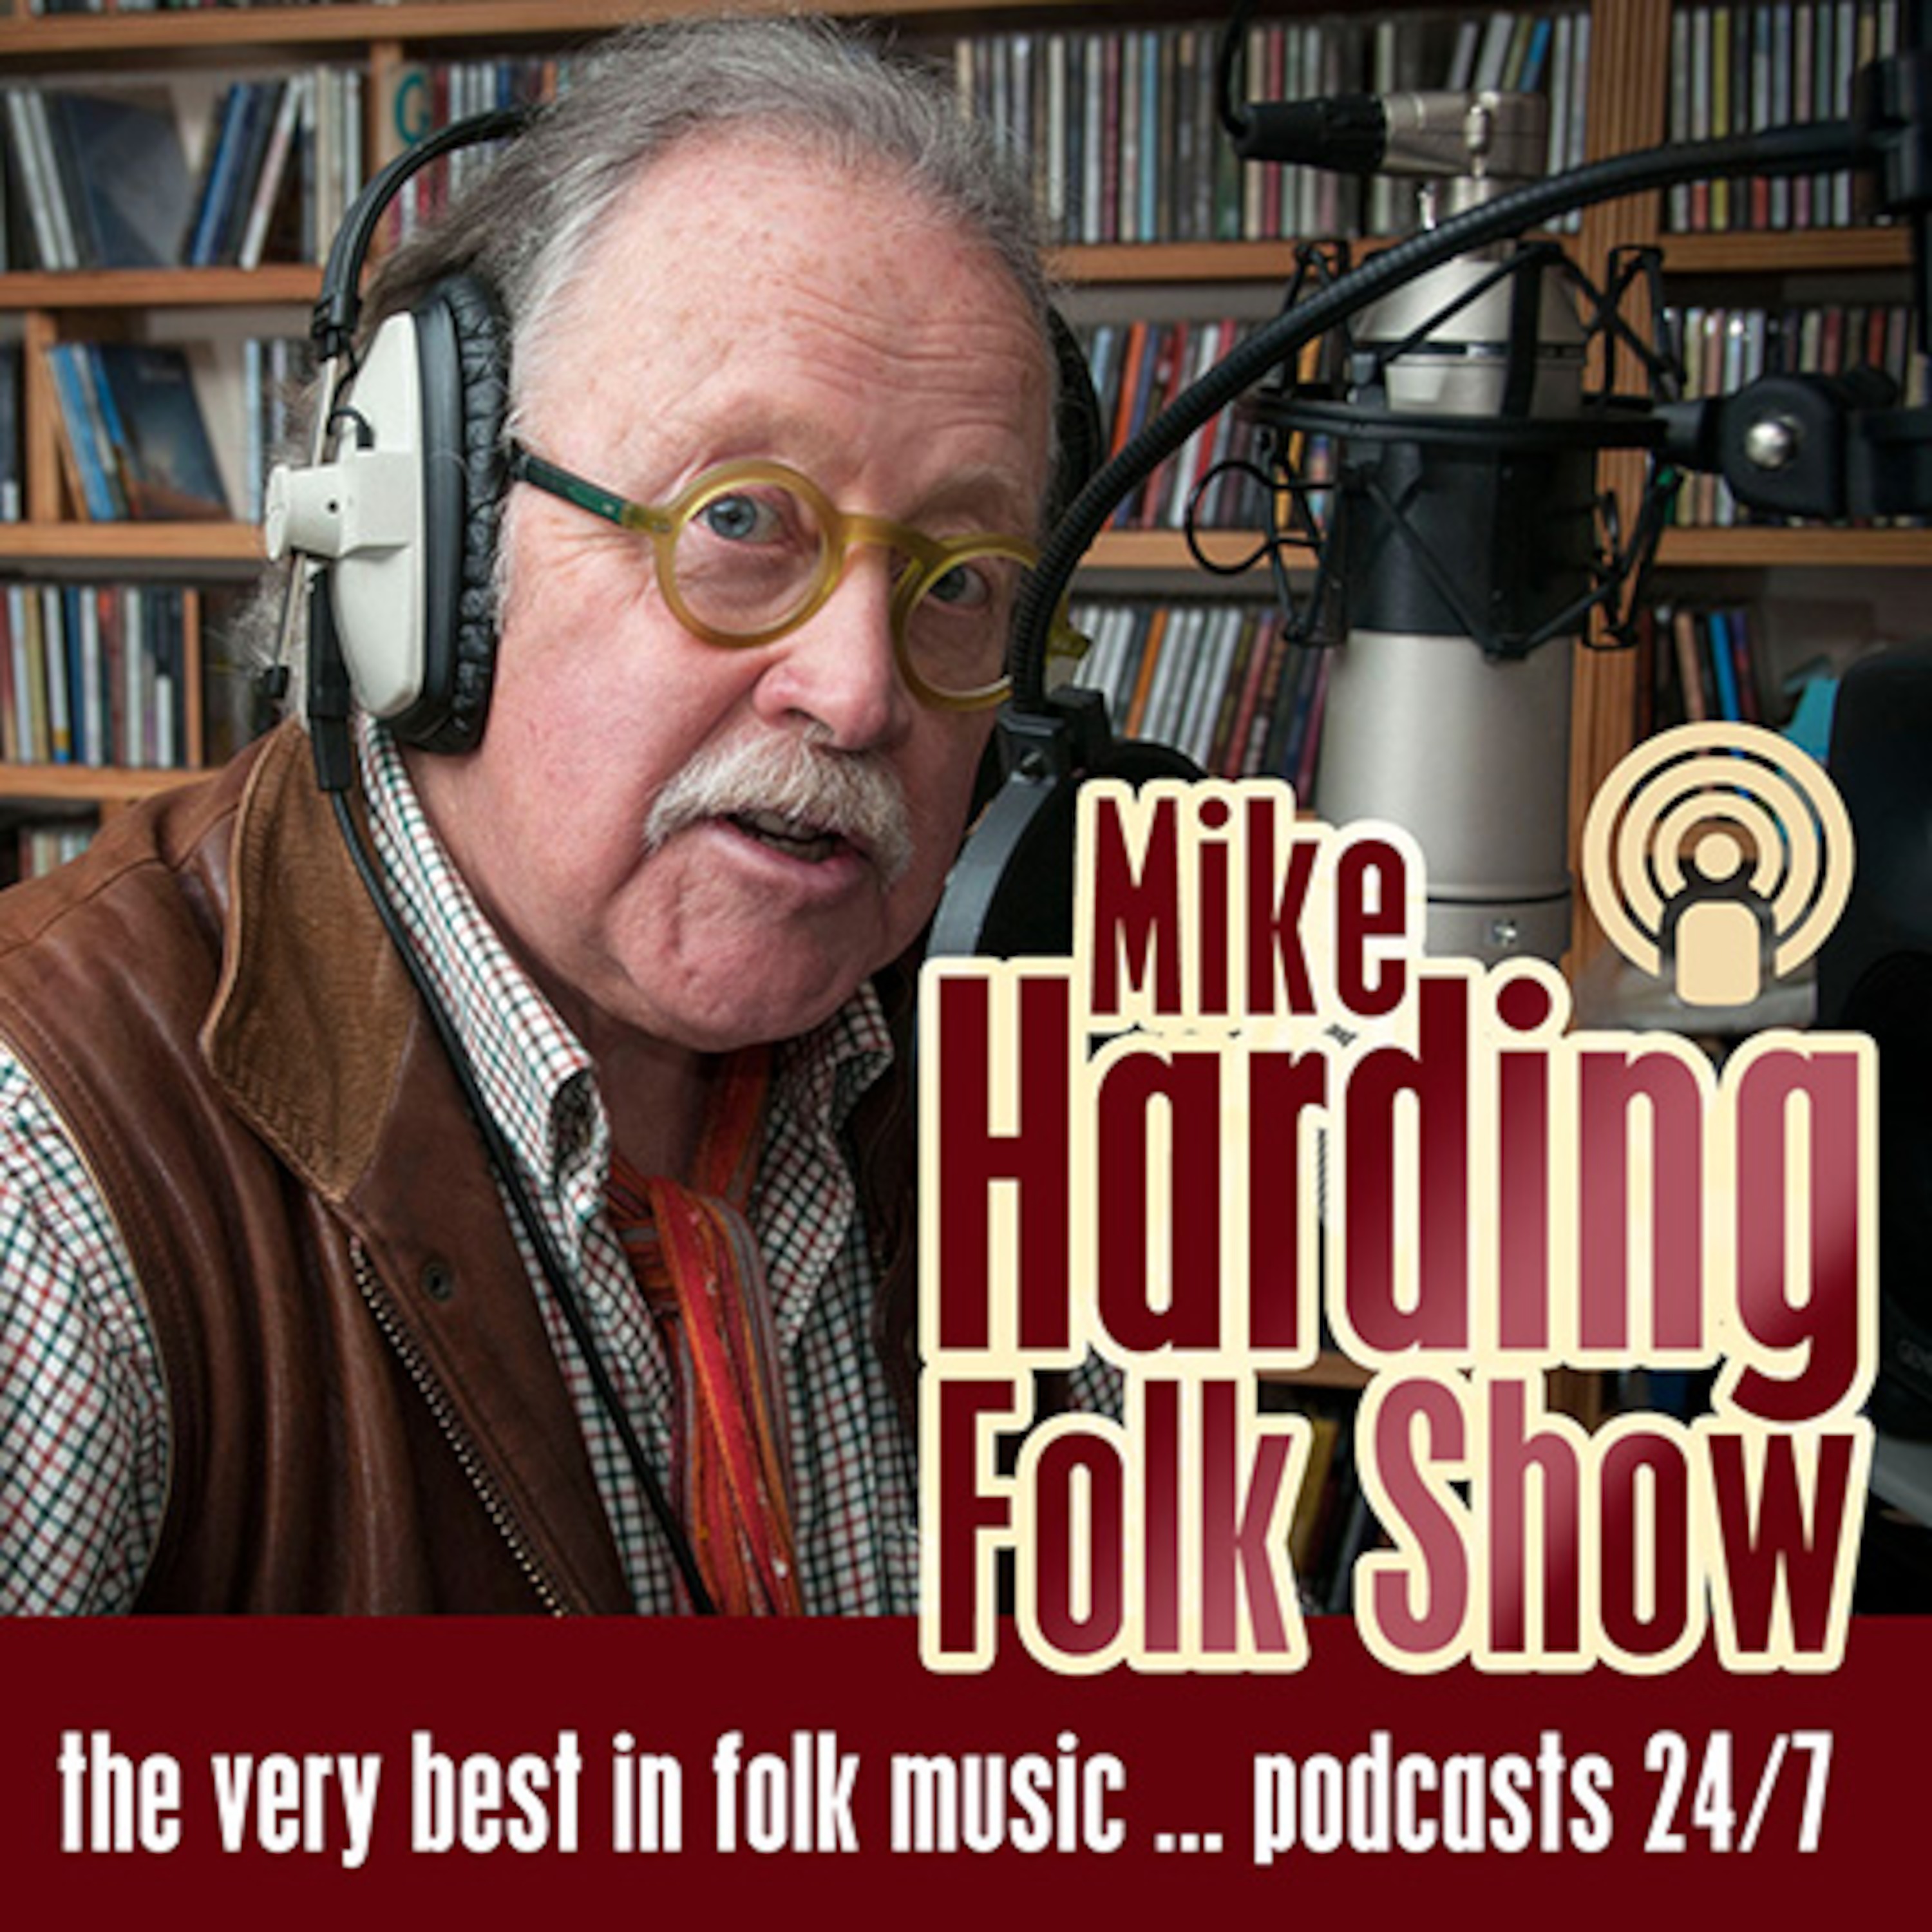 Mike Harding Folk Show 182